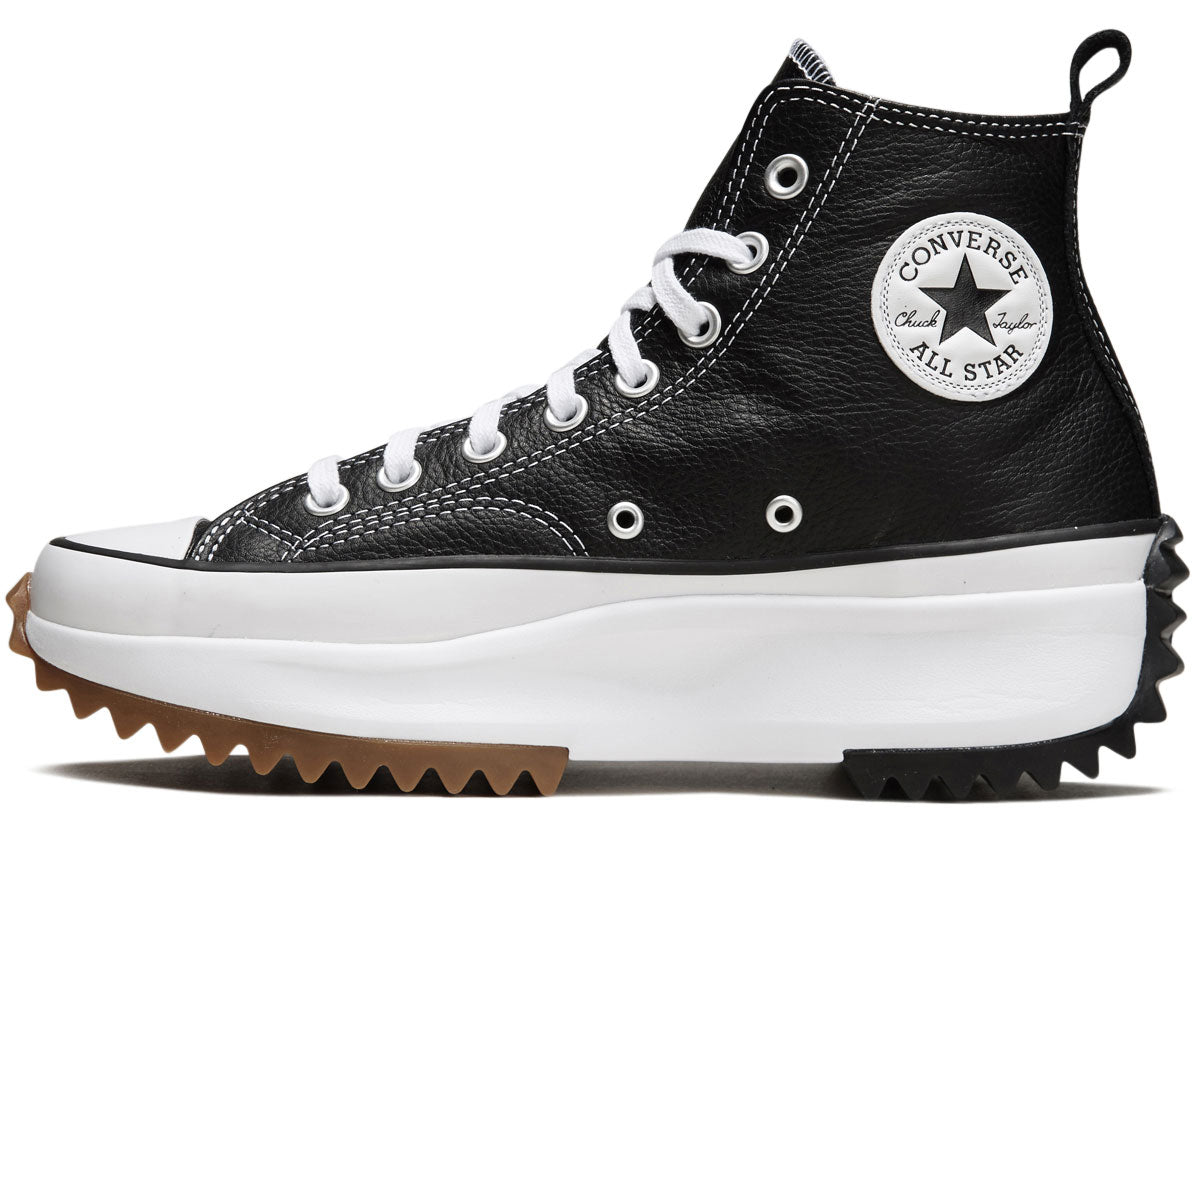 Converse Run Star Hike Hi Shoes - Black/White/Gum image 2